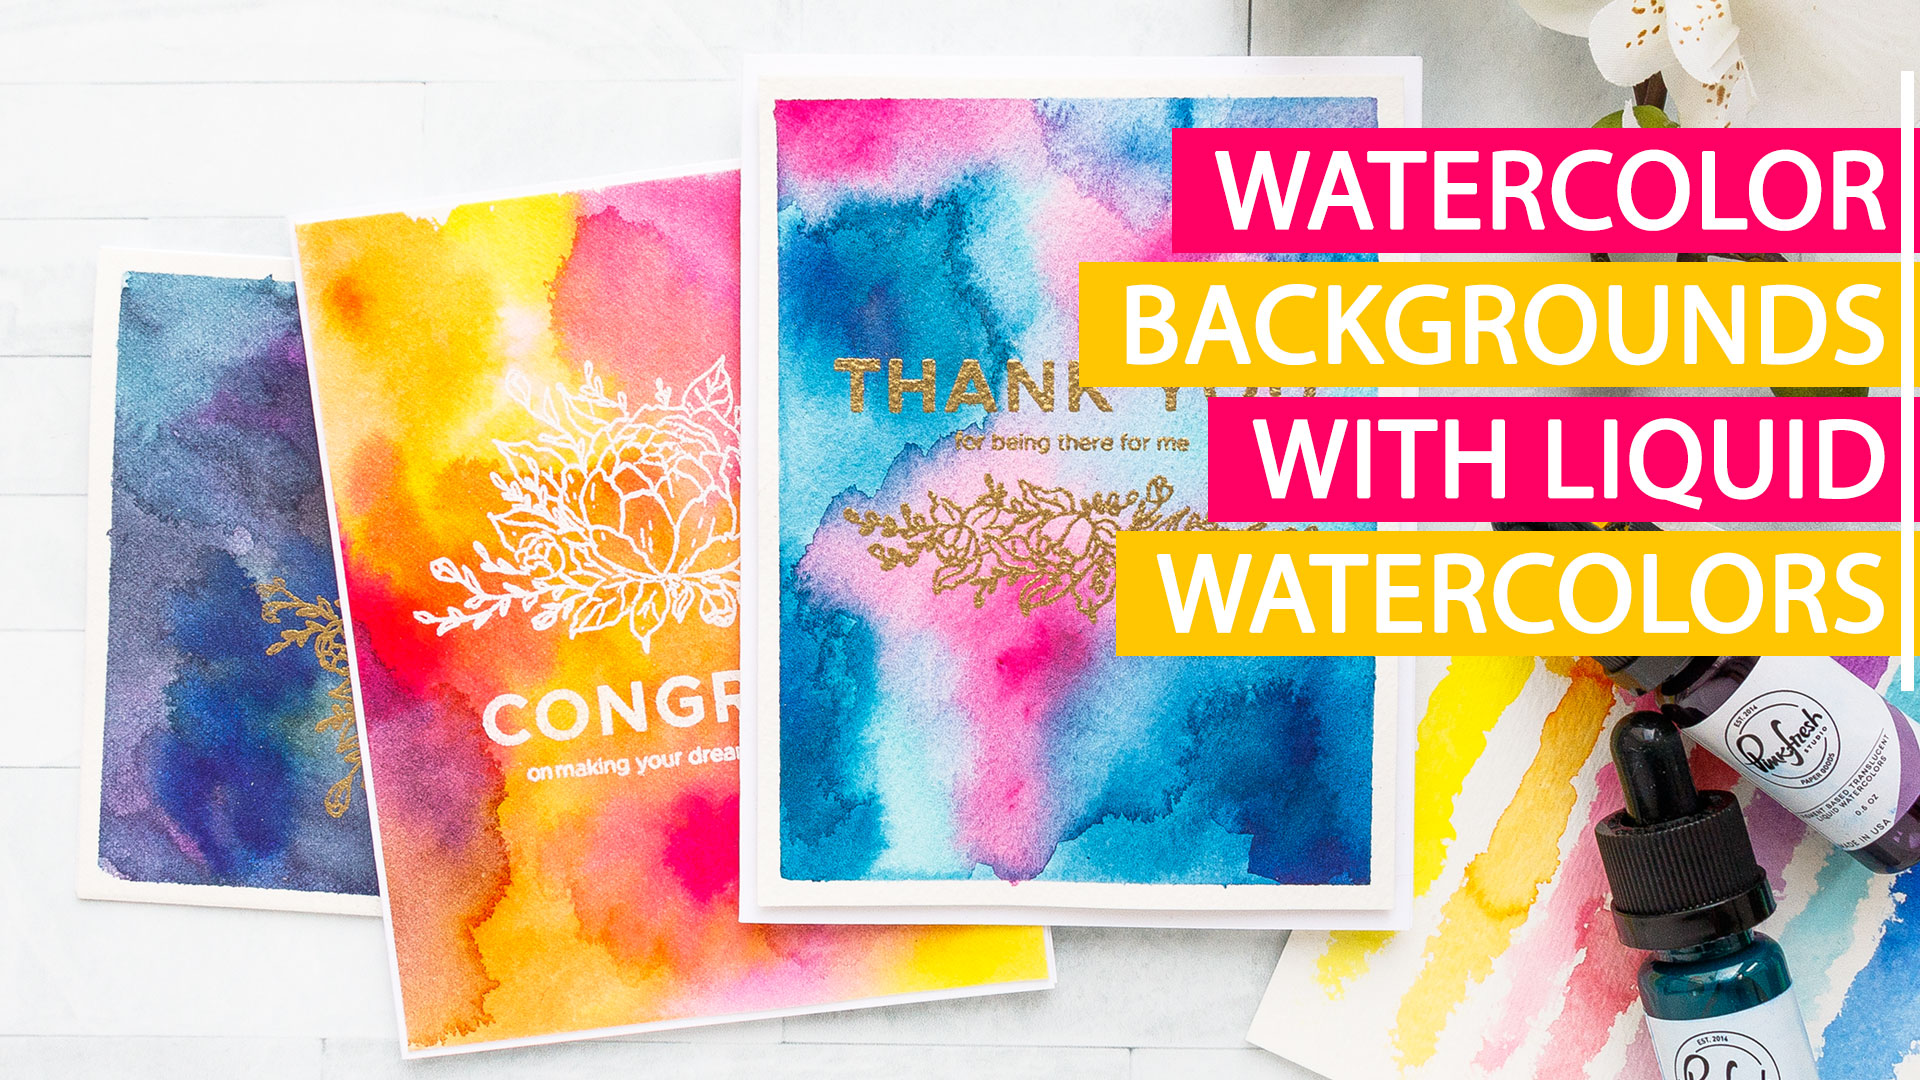 Watercolor Backgrounds With Liquid Watercolors With Pinkfresh Studio. Video (Video Hop) | Yana Smakula